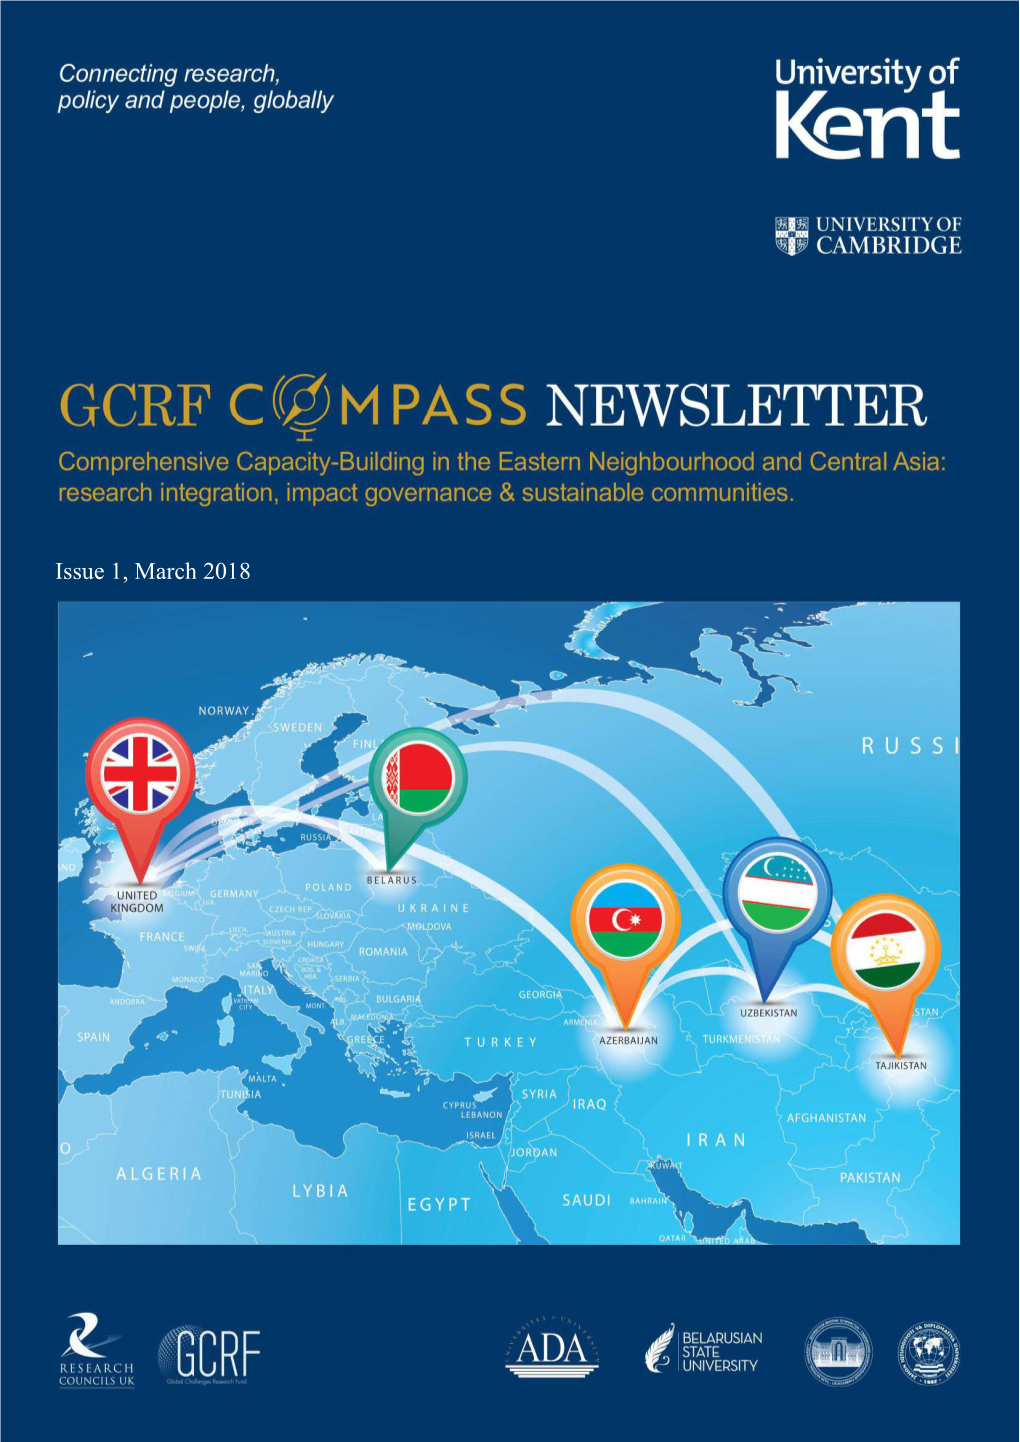 GCRF COMPASS NEWSLETTER Issue 1